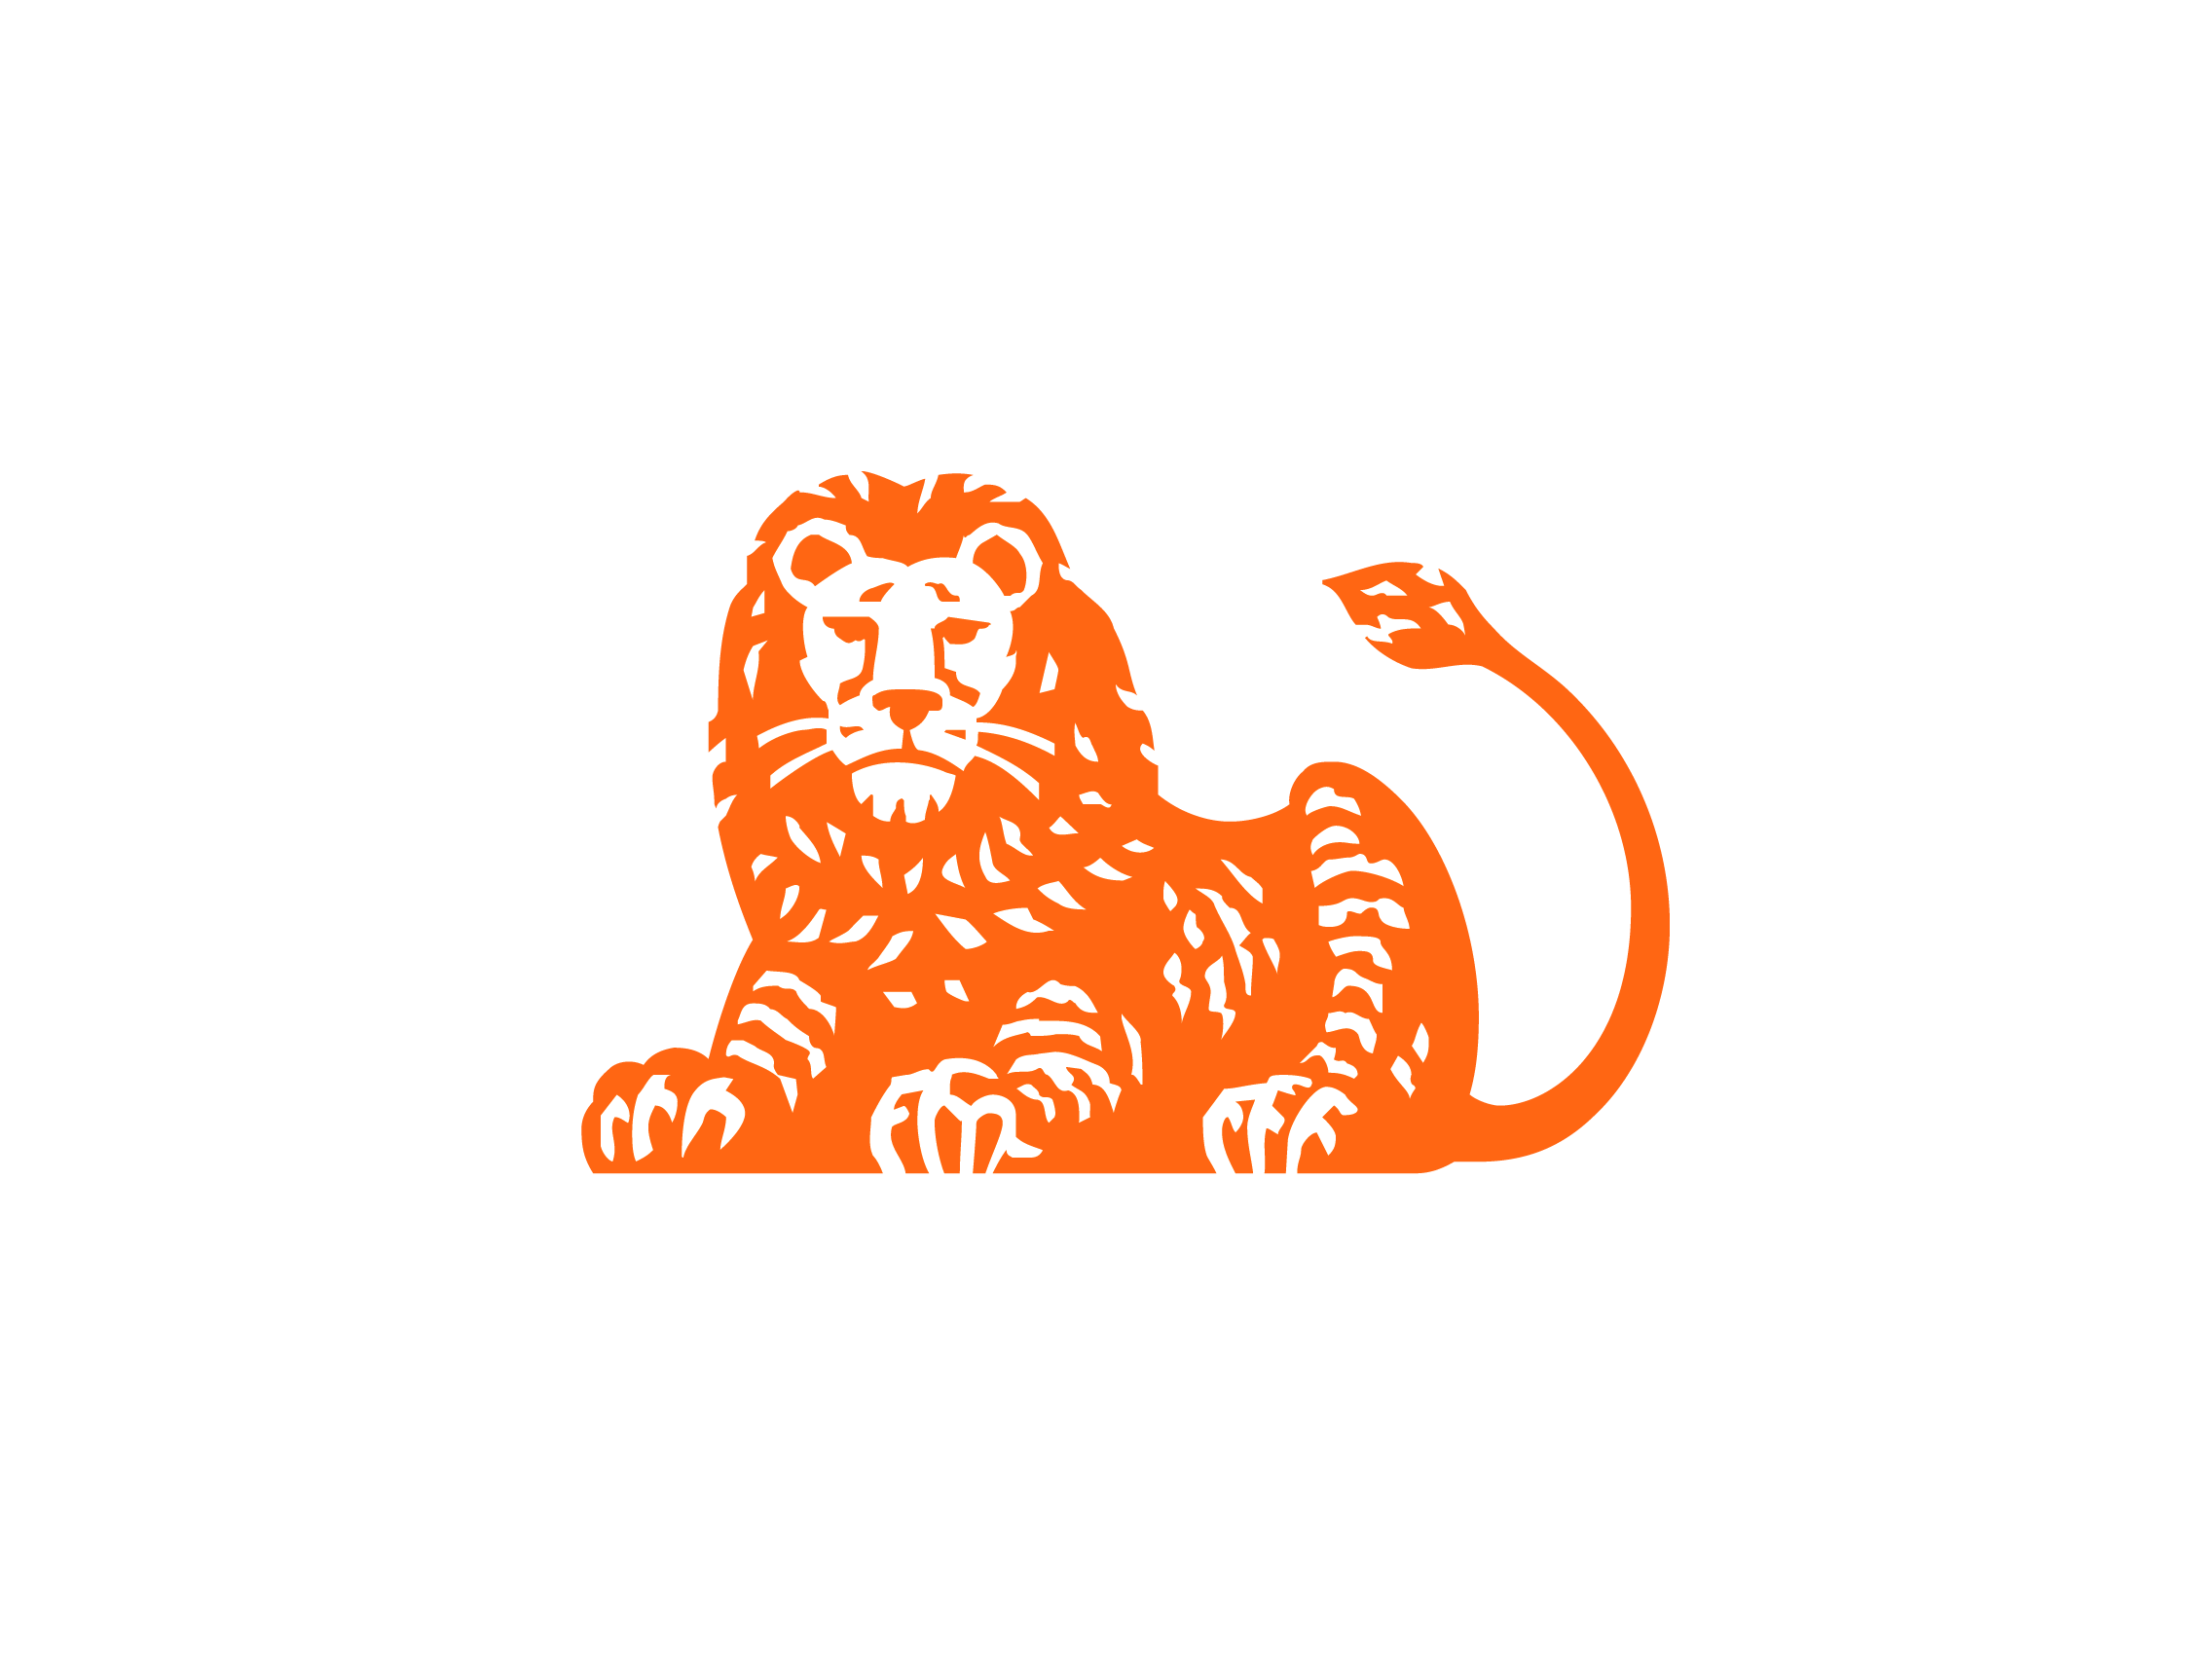 Инг евразия. Ing банк лого. Лев логотип. Оранжевый Лев логотип. Фирма с логотипом Льва.